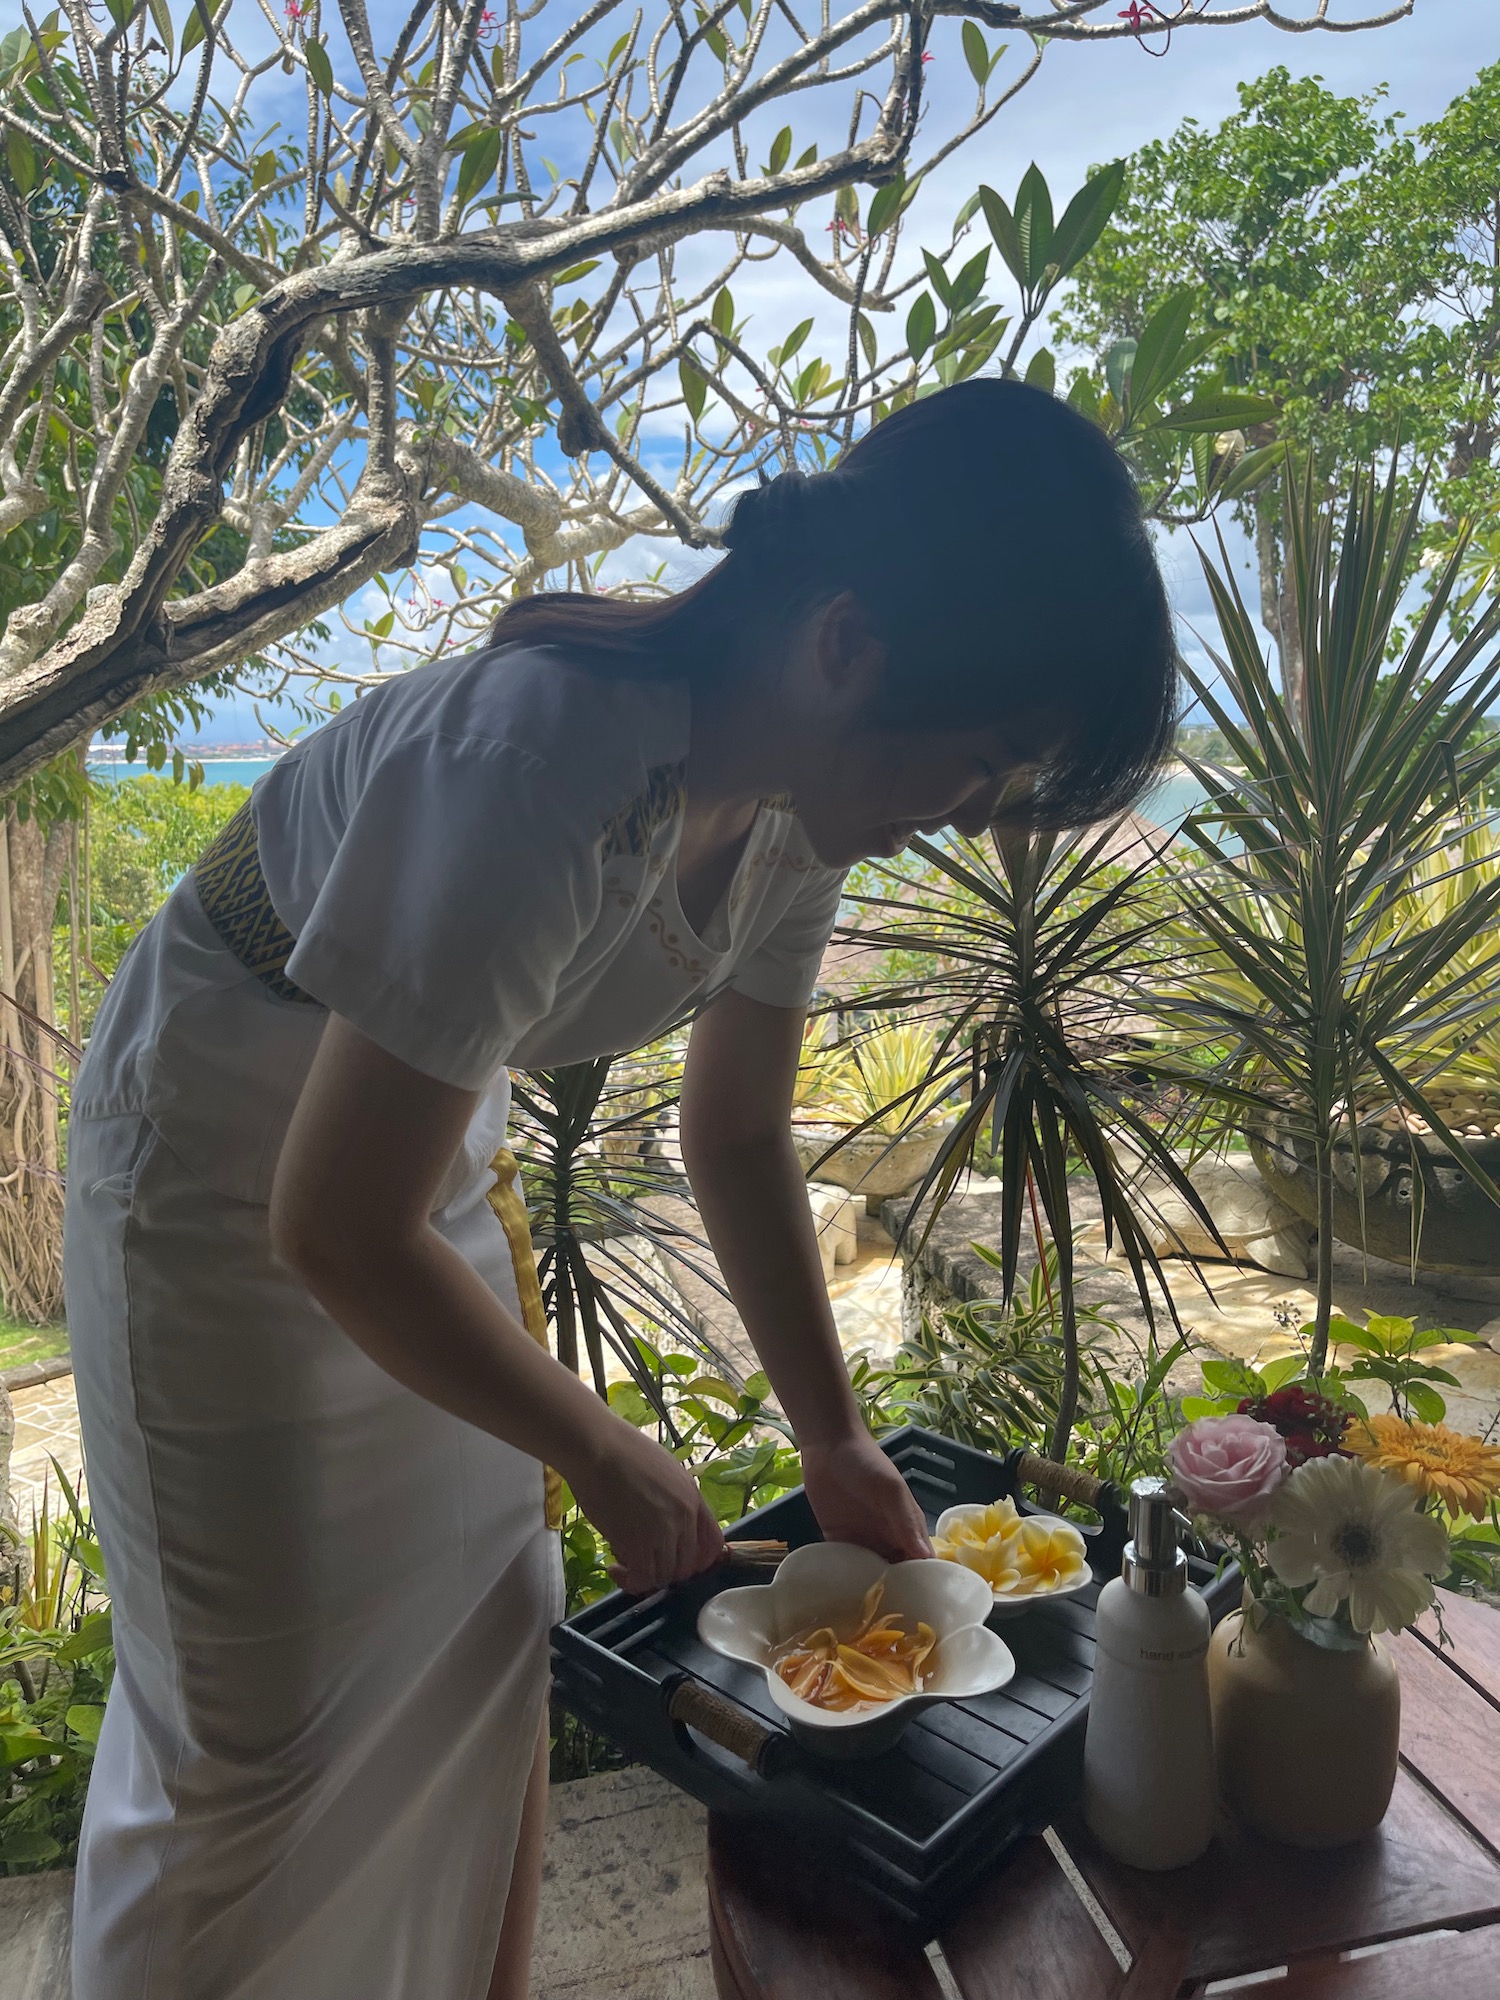 a woman in a white dress preparing food